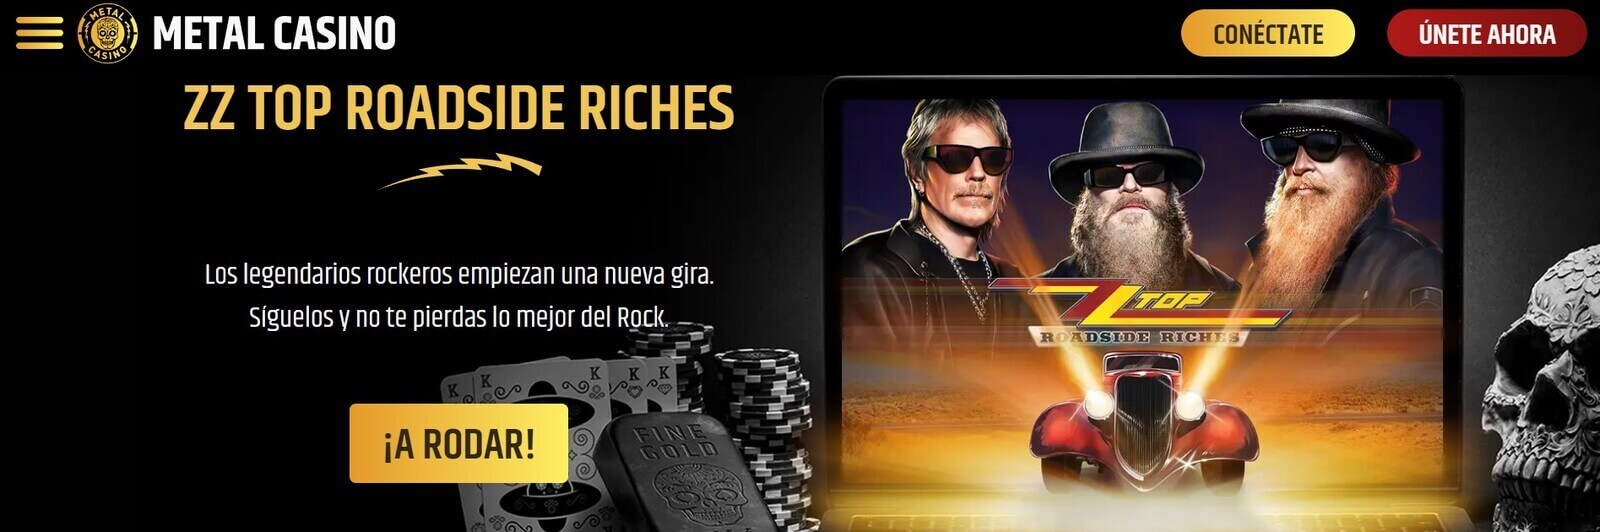 Reseña de Metal Casino online en España